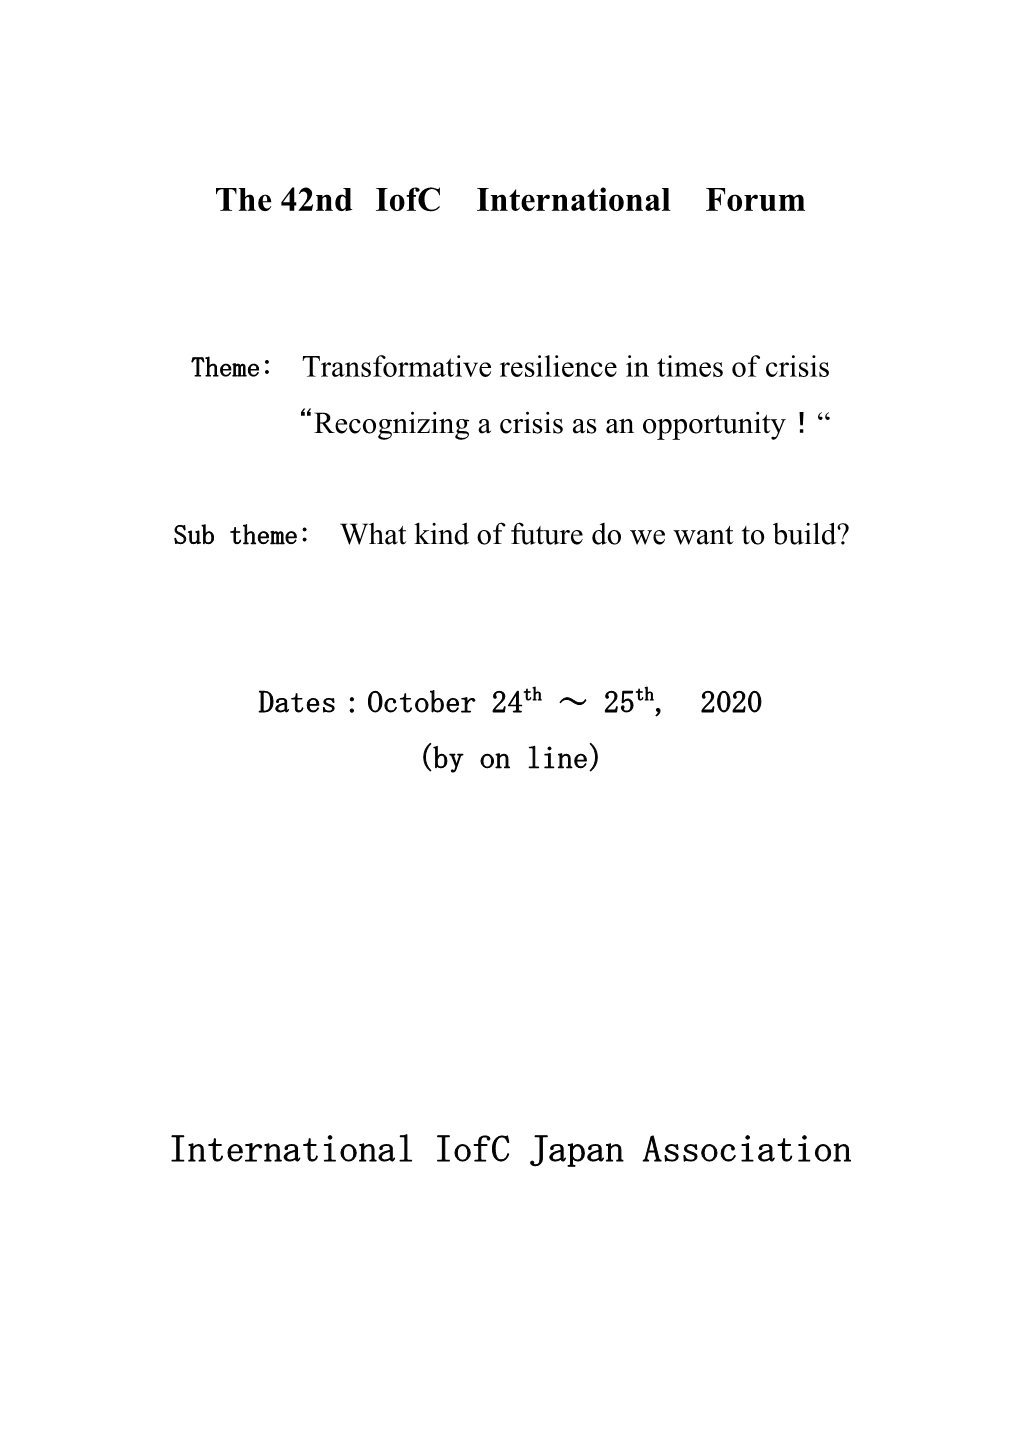 International Iofc Japan Association